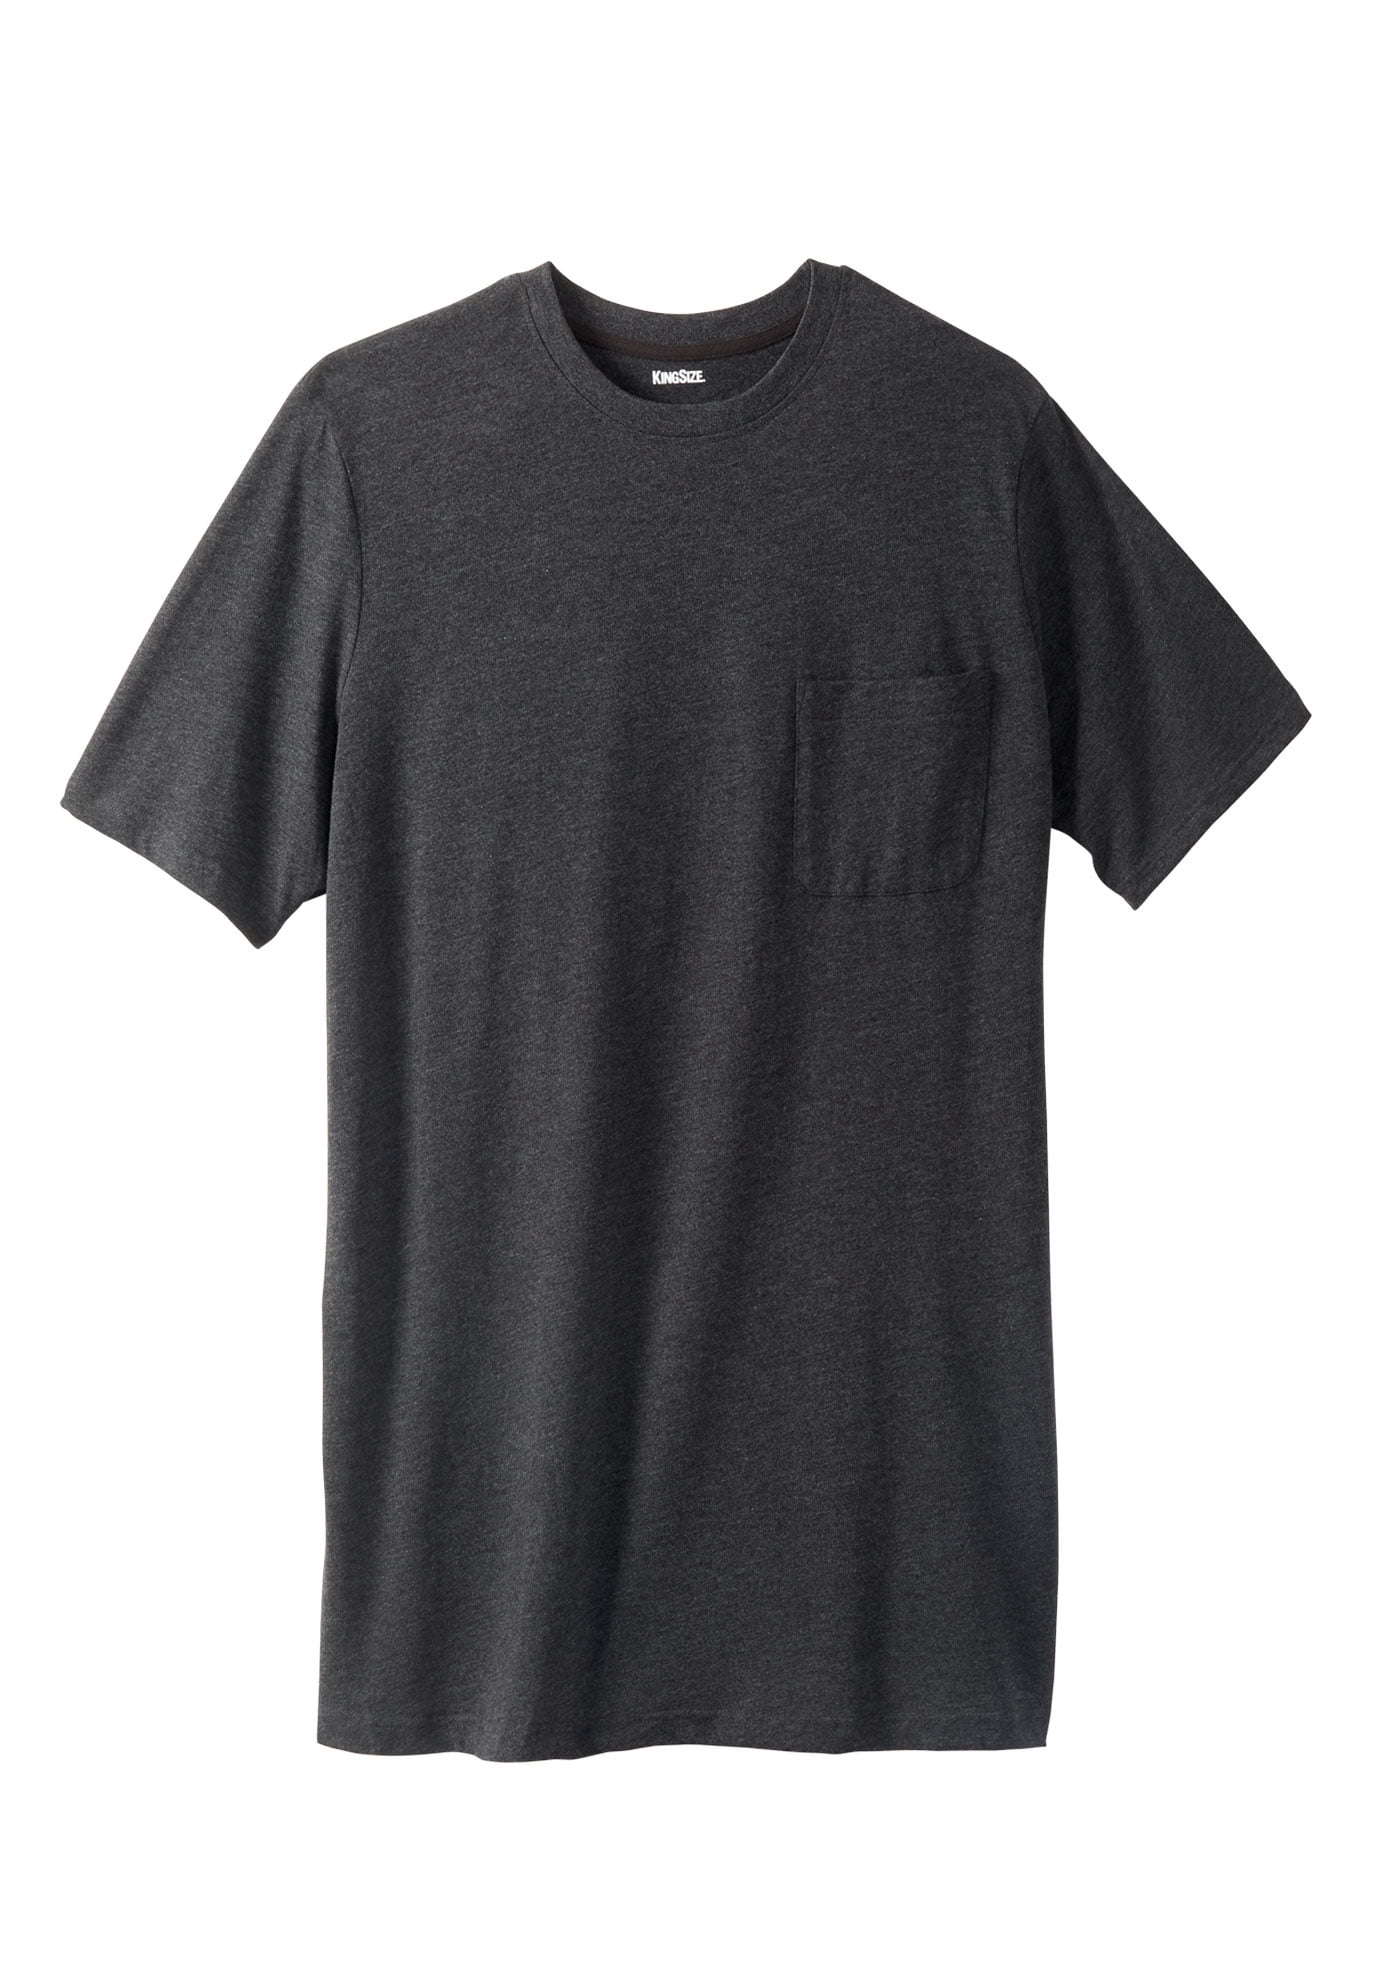 KingSize Mens Big & Tall Shrink-Less Lightweight Longer-Length Crewneck Pocket T-Shirt 